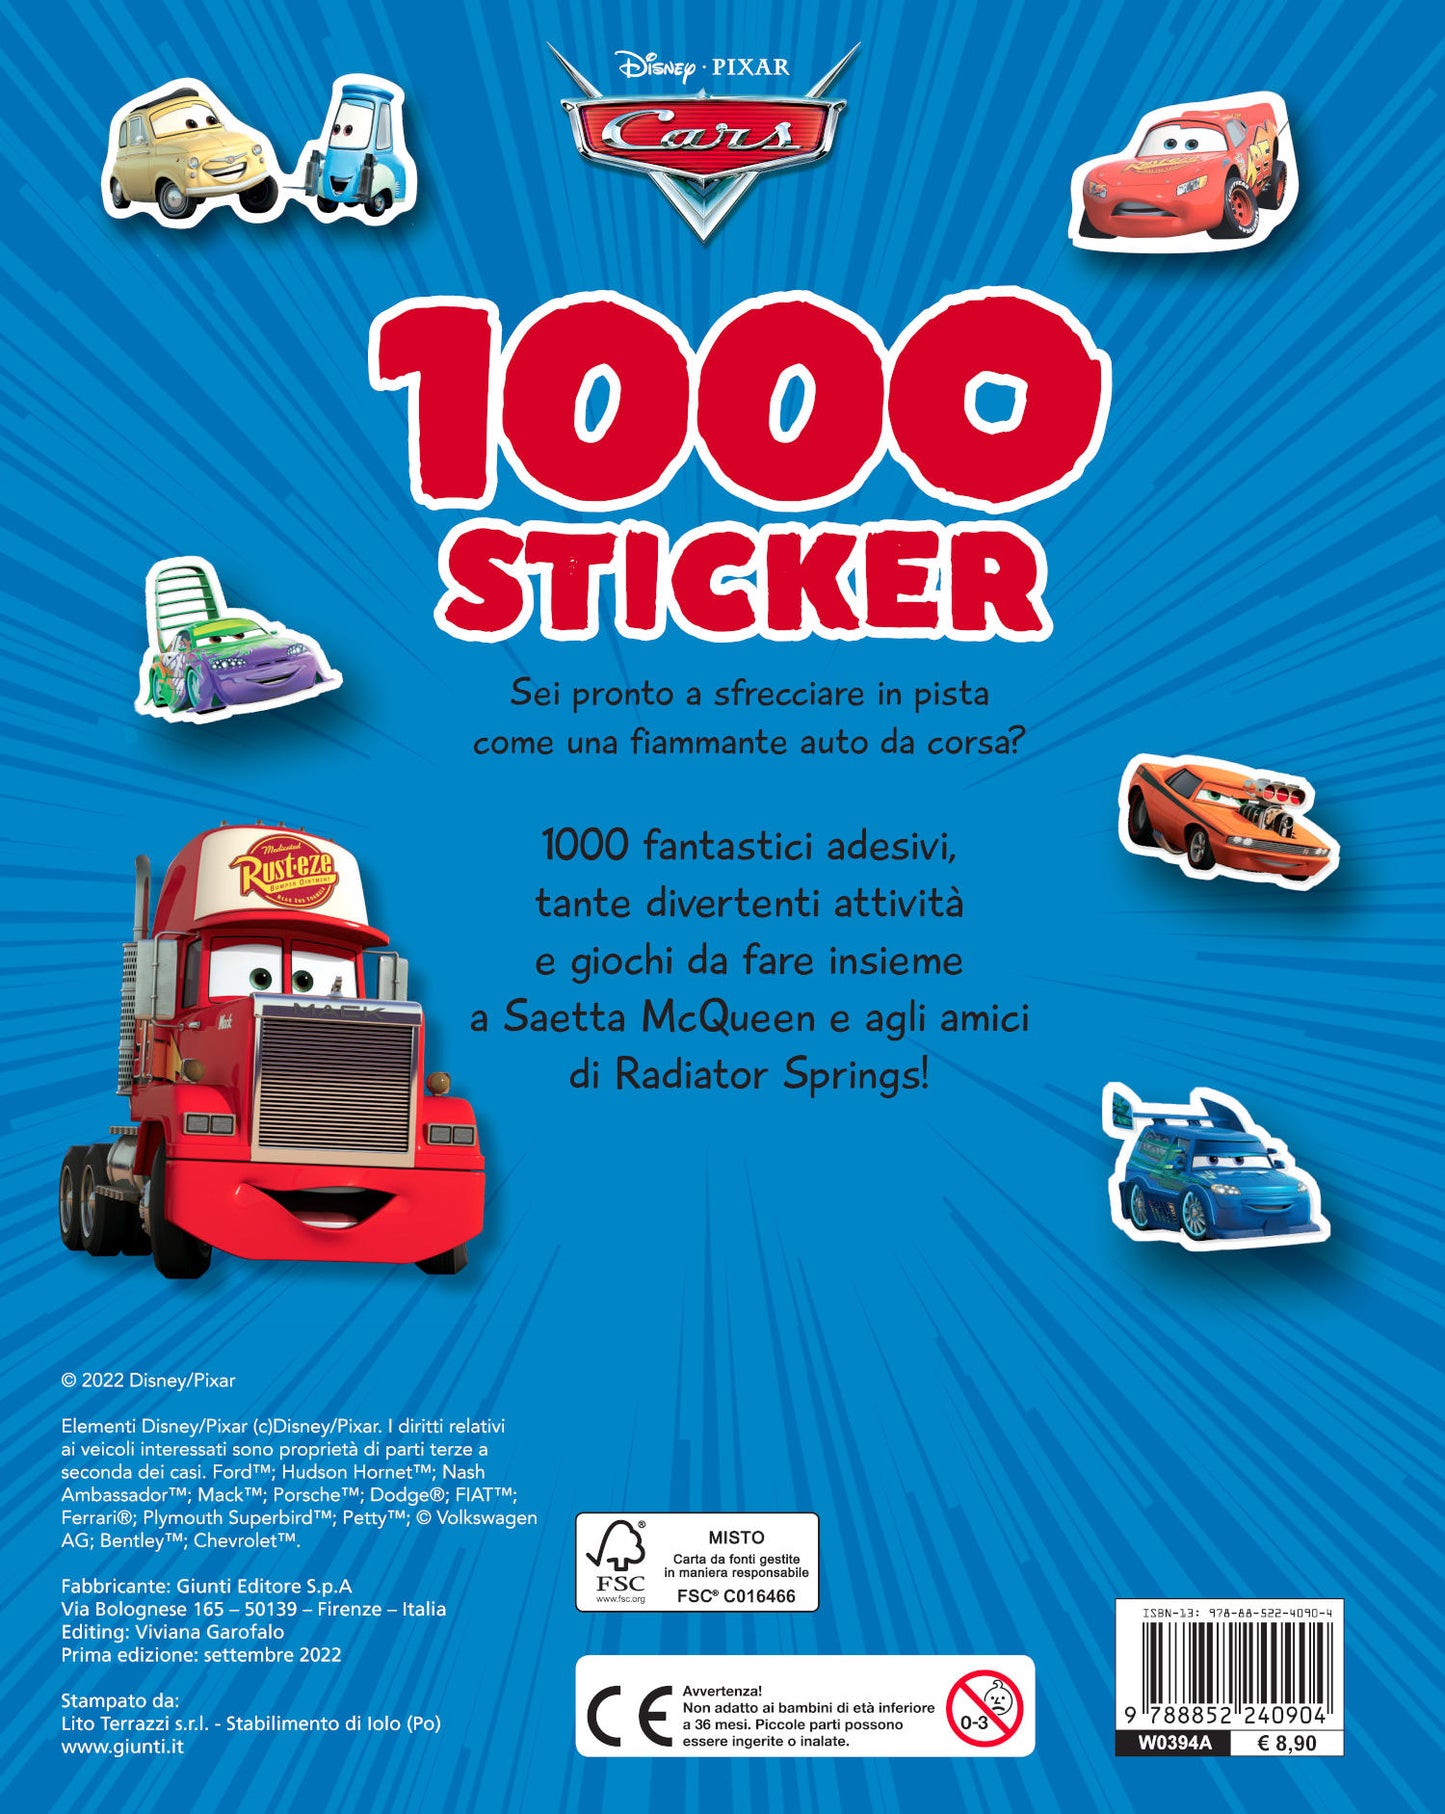 Cars 1000 Sticker